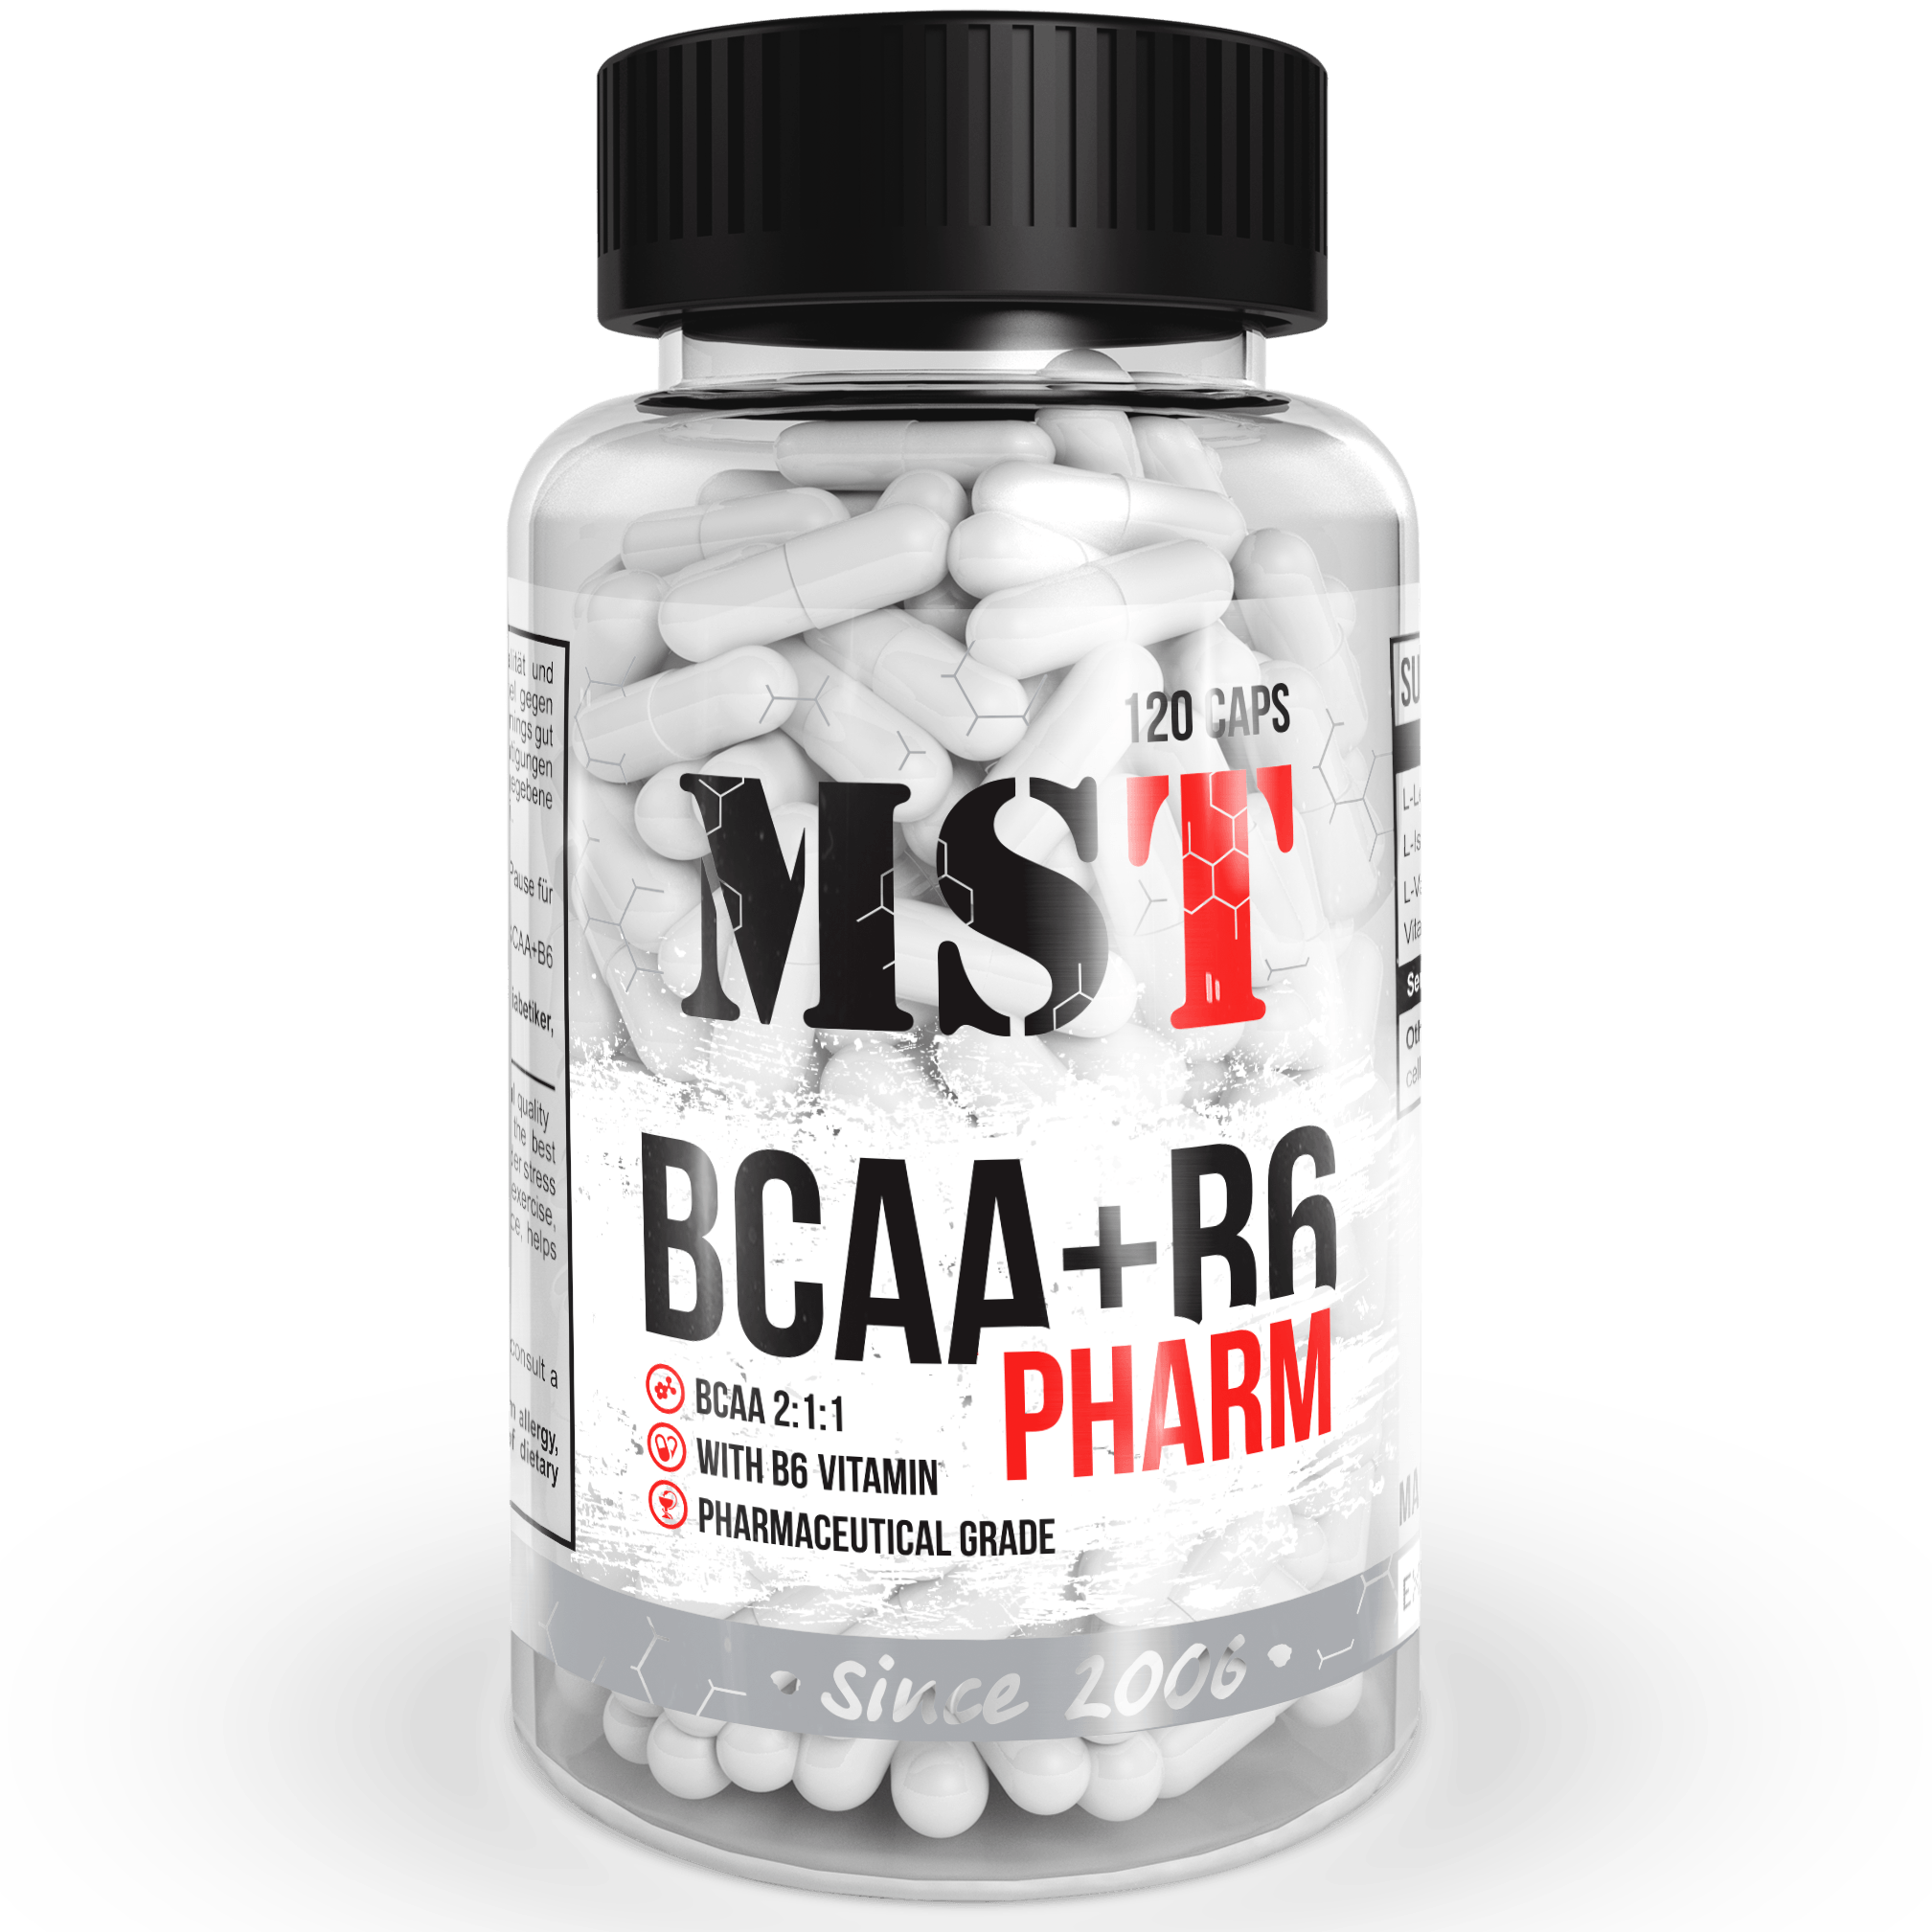 BCAA+B6 Pharm, 120 pcs, MST Nutrition. BCAA. Weight Loss recovery Anti-catabolic properties Lean muscle mass 